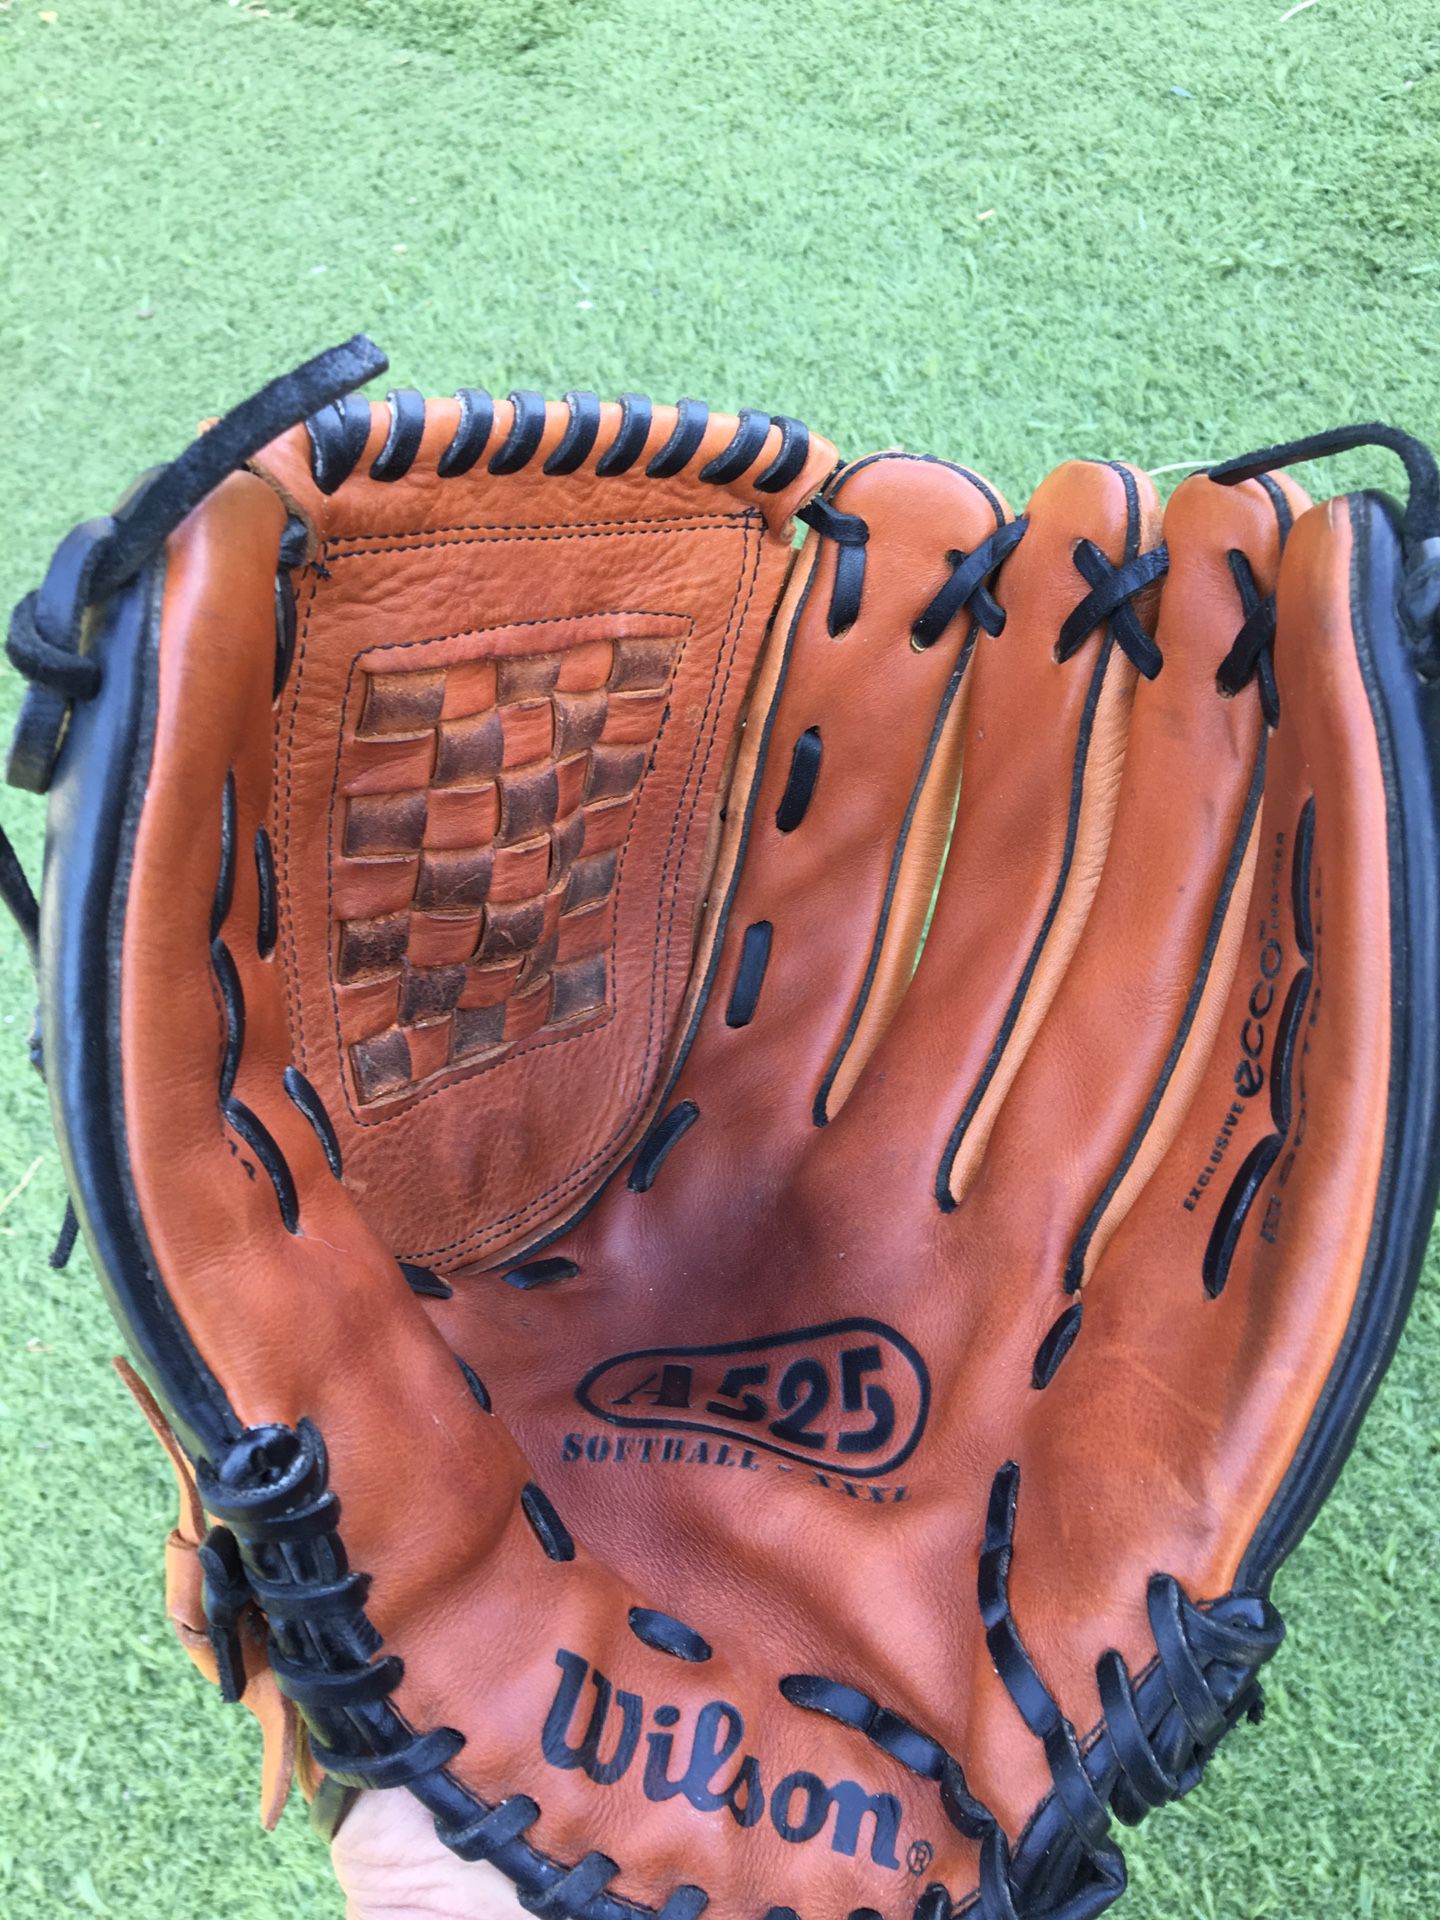 Wilson Softball Leather Glove 14”